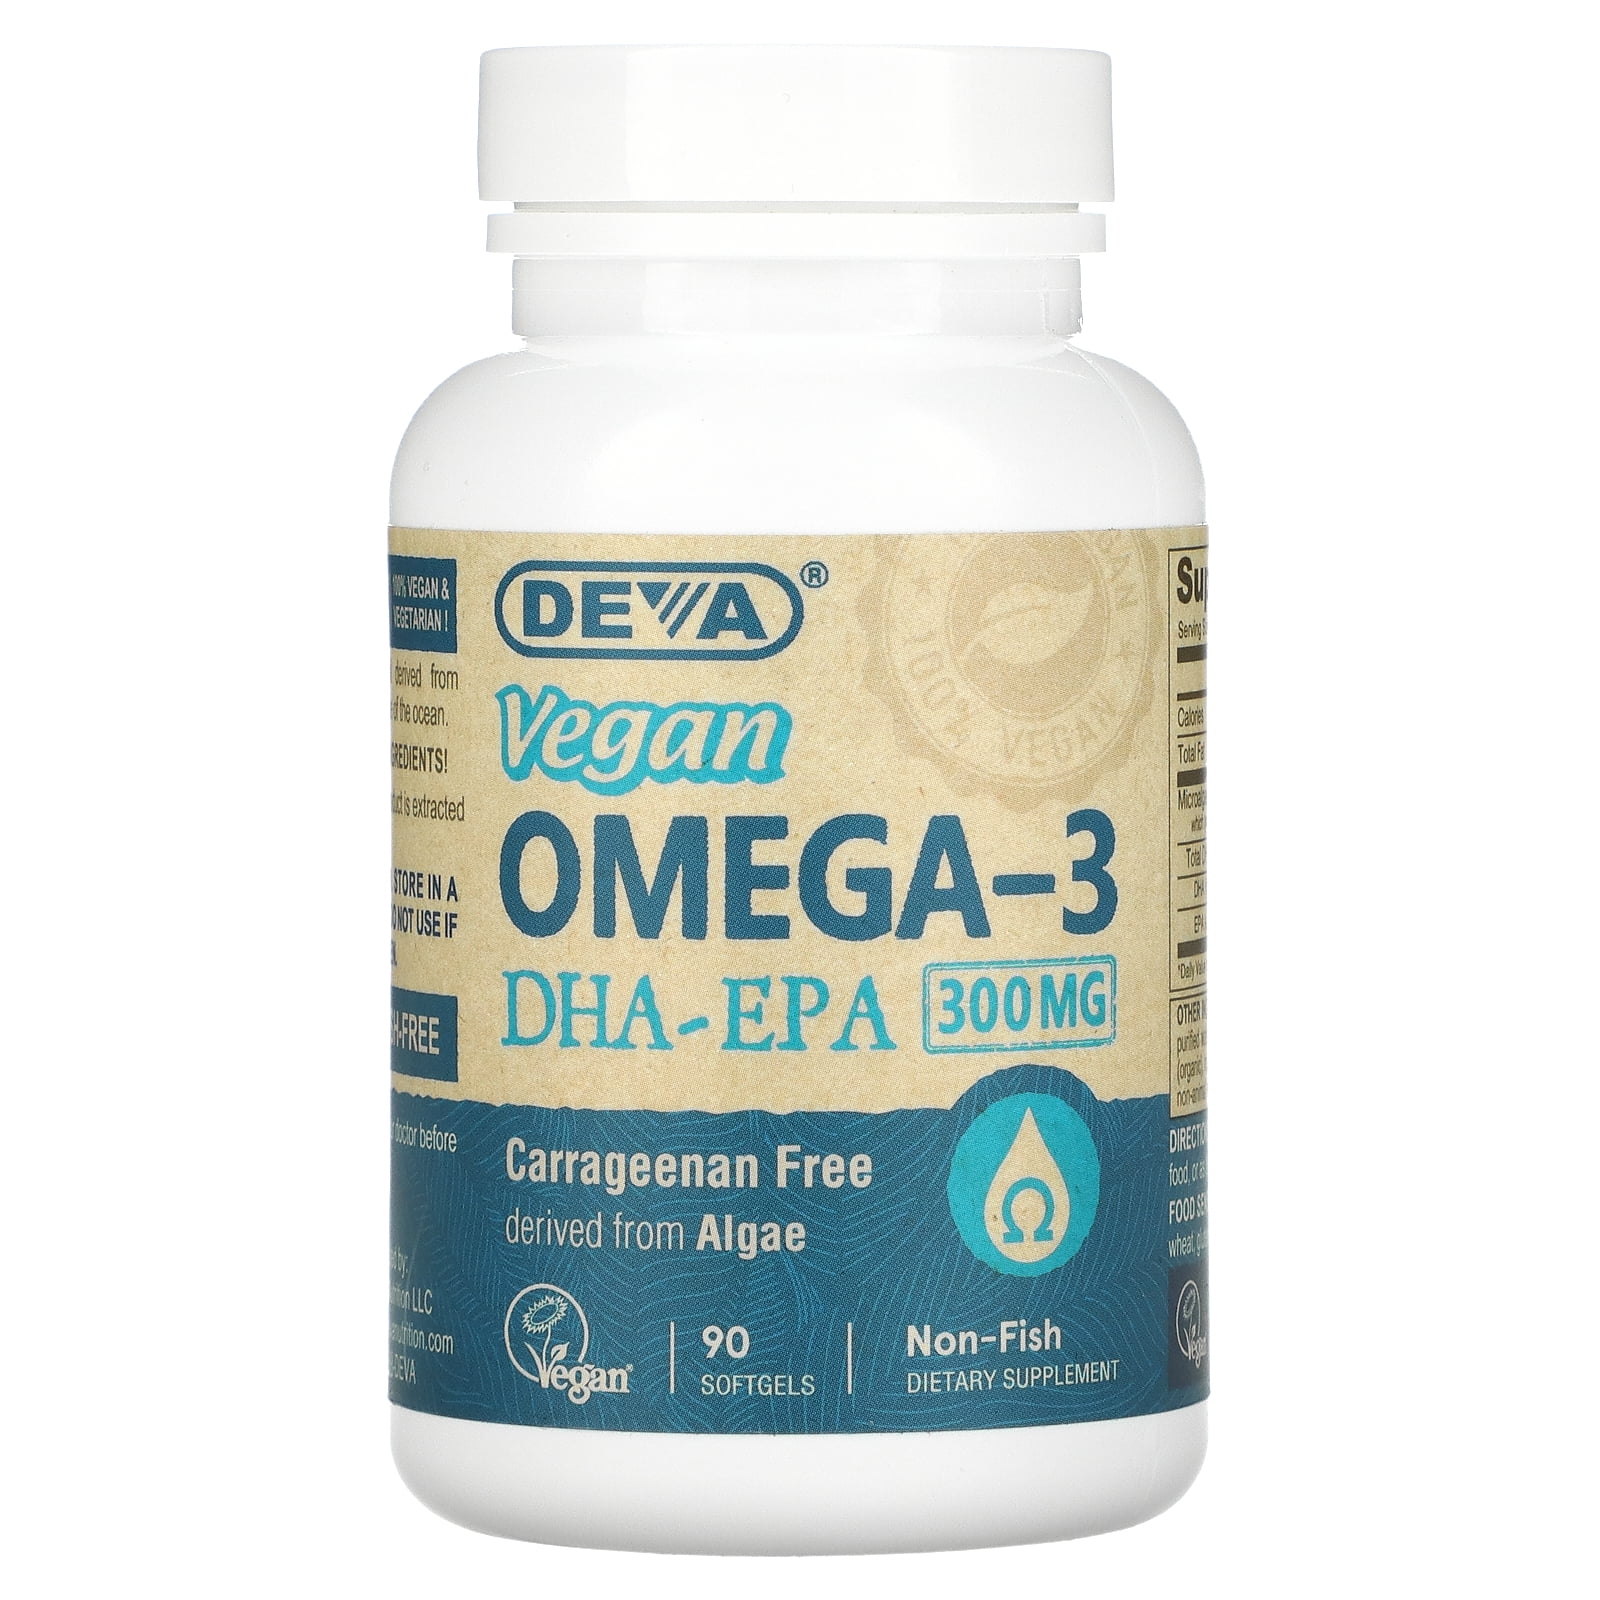 Omega-3 Vegetarian DHA 200 mg Vegetarian Softgels - Heart Health - Solgar